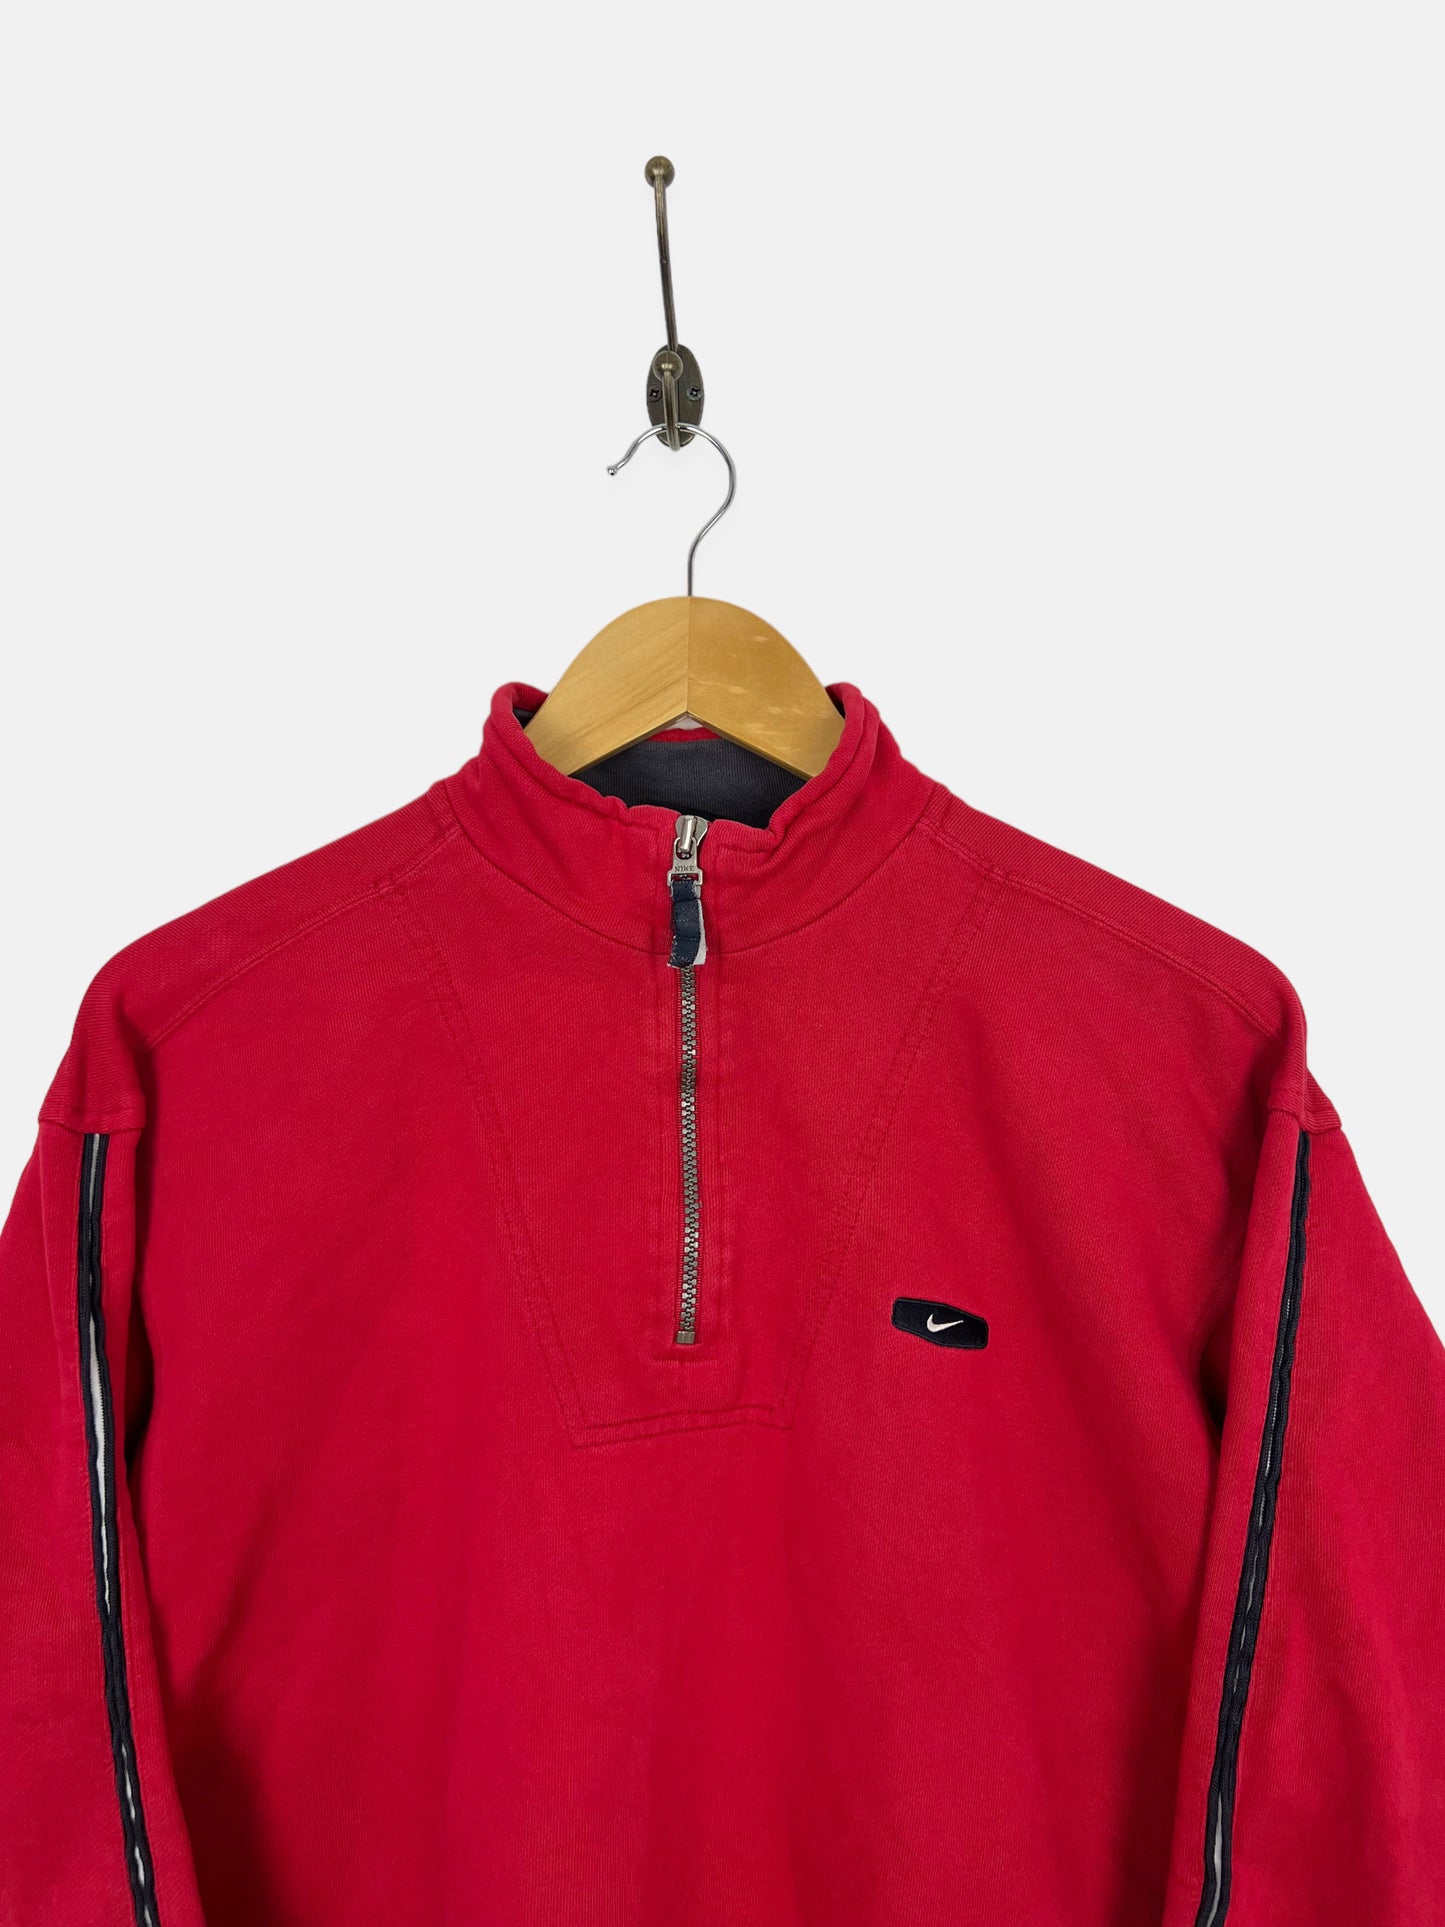 90's Nike Embroidered Vintage Quarterzip Sweatshirt Size 8